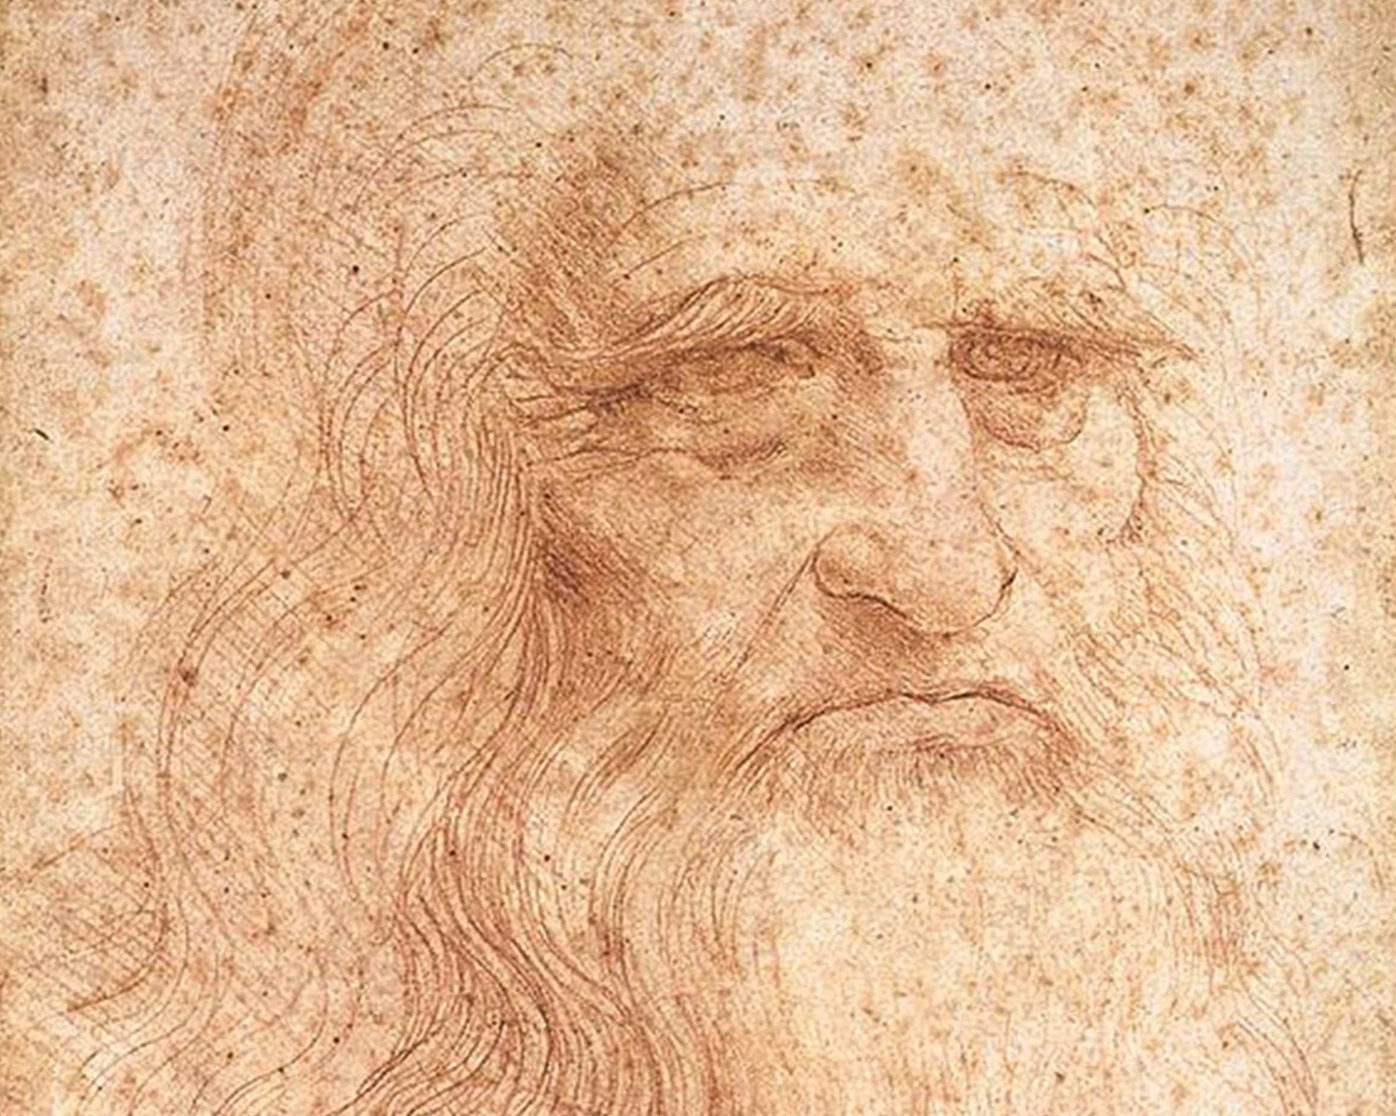 Leonardo_da_Vinci_-_presumed_self-portrait_-_WGA12798